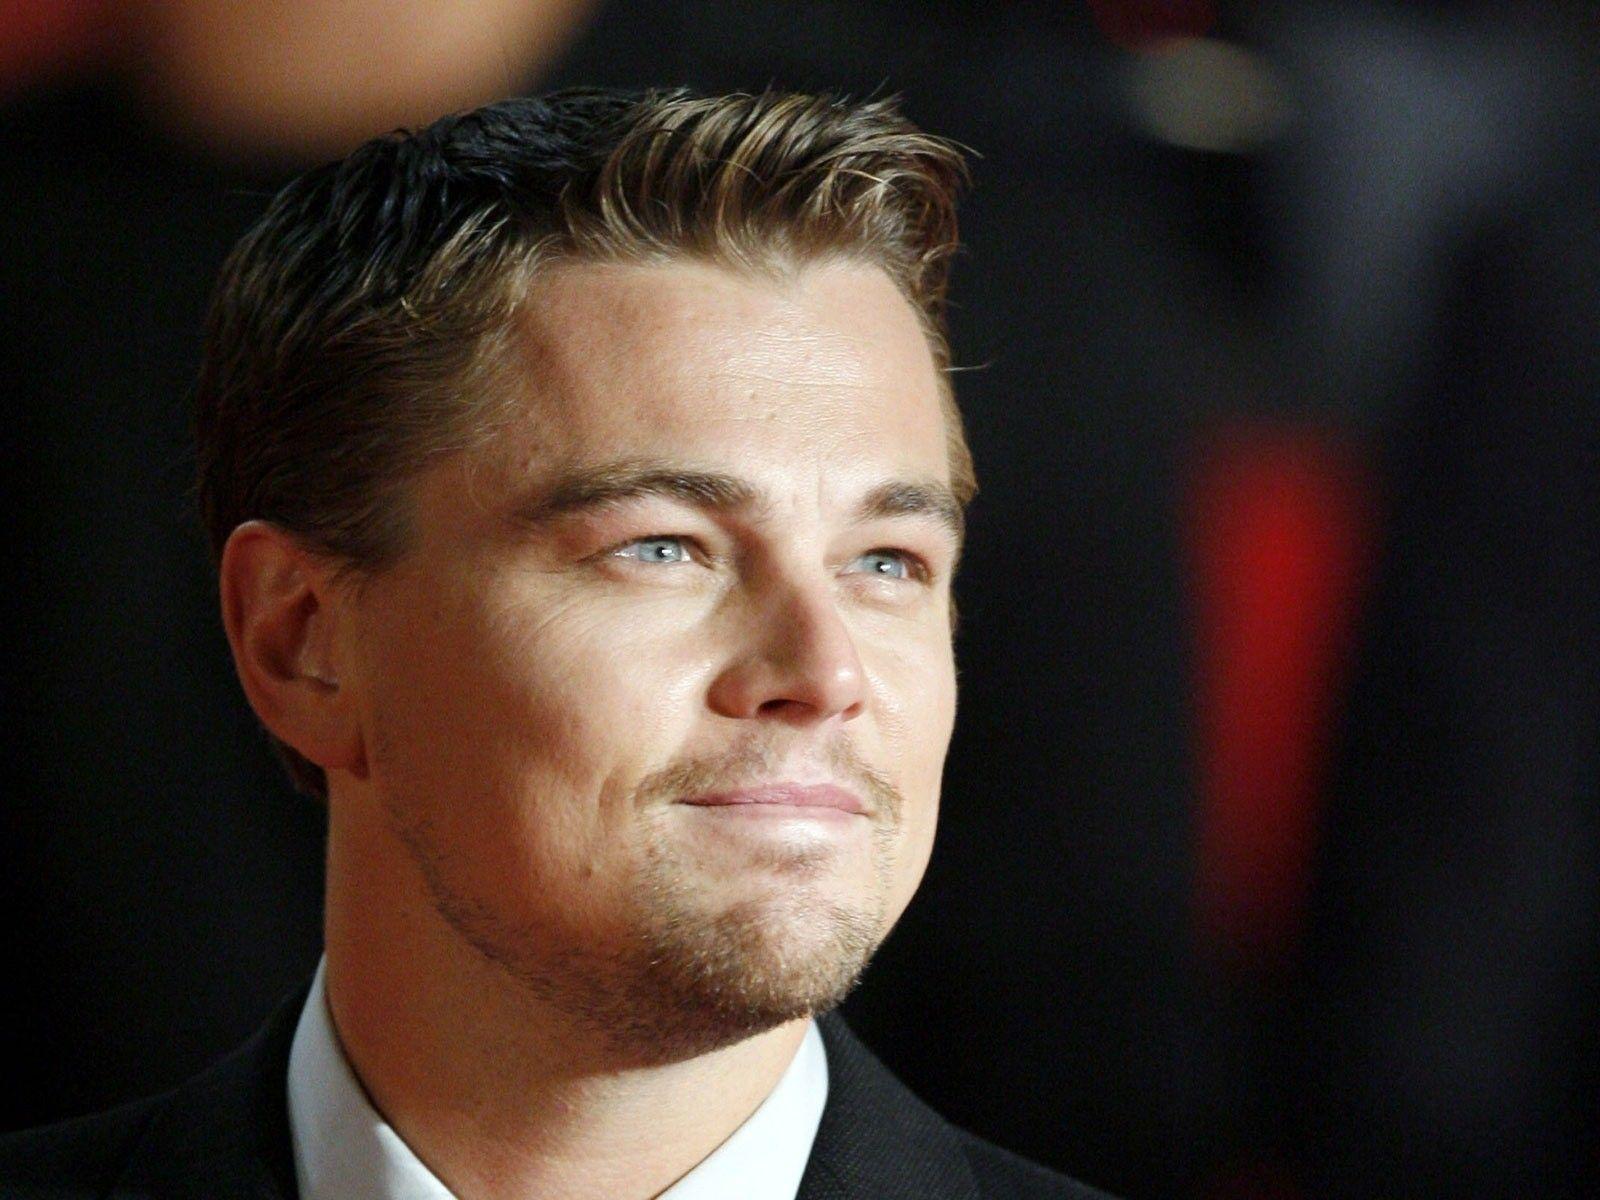 Leonardo DiCaprio HD Photo. Movie Celebrity Actor Wallpaper Image